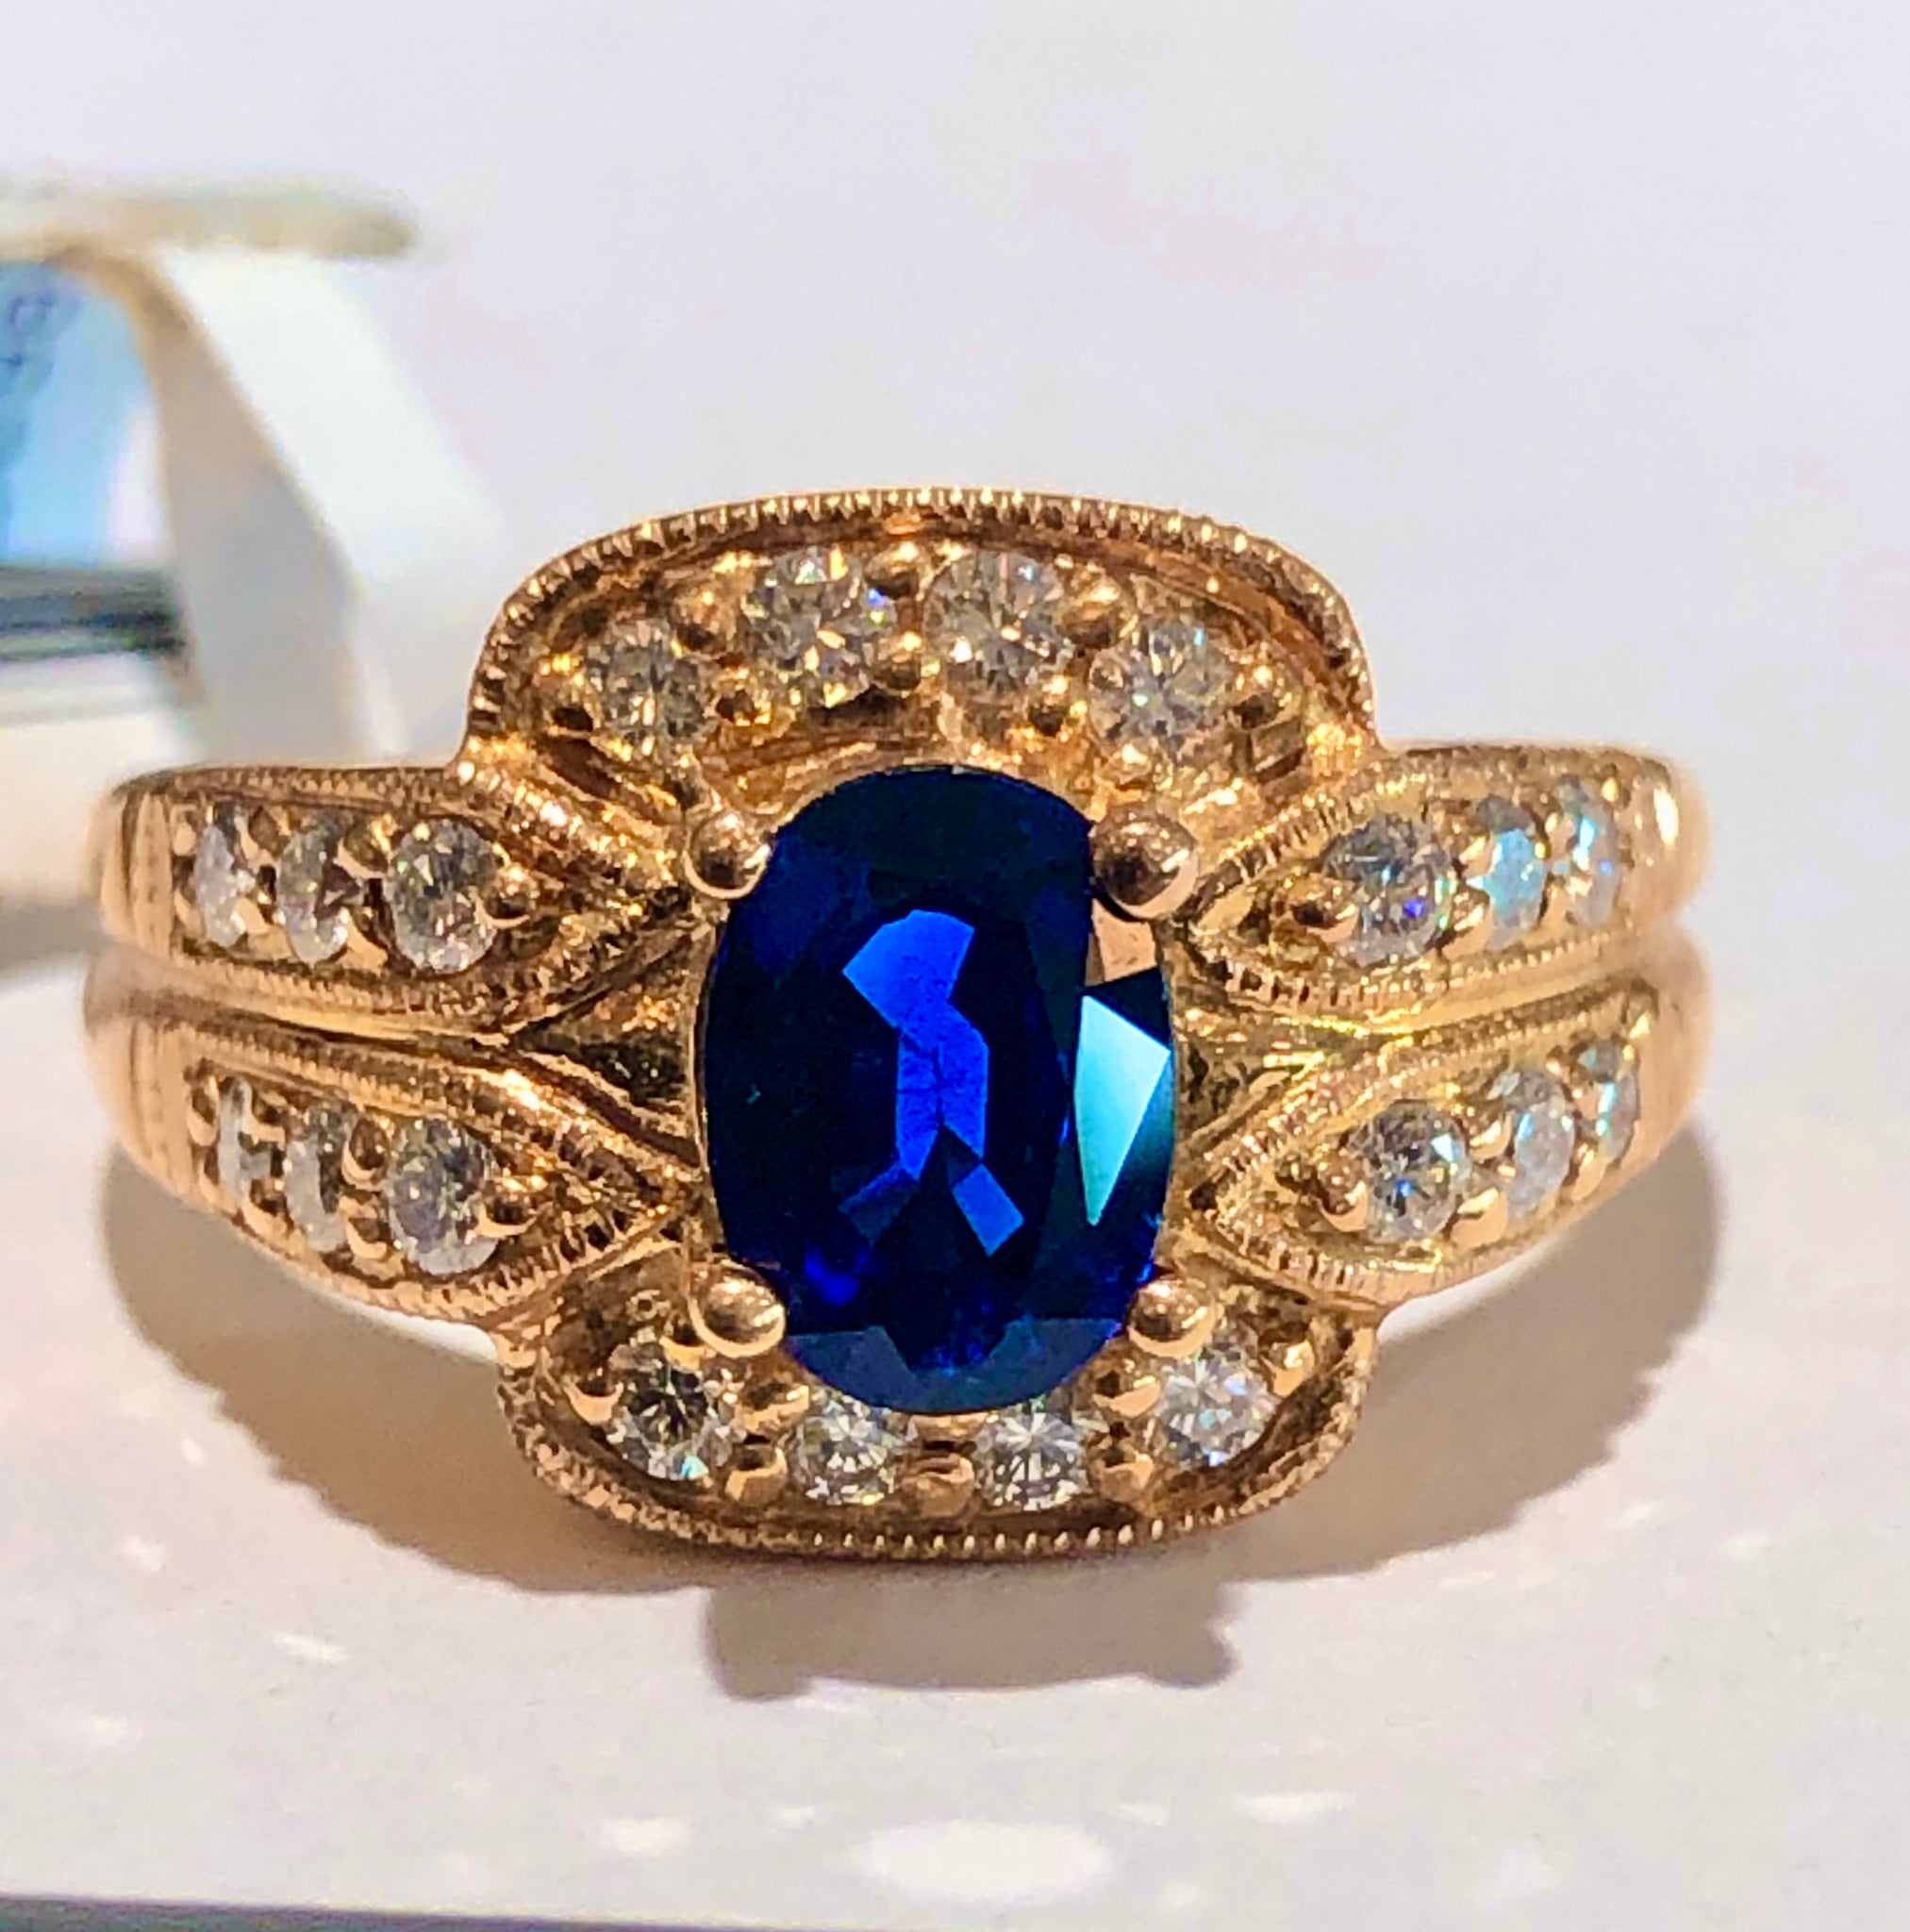 Royal Blue sapphire and Diamonds Ring 18 Karat Rose Gold